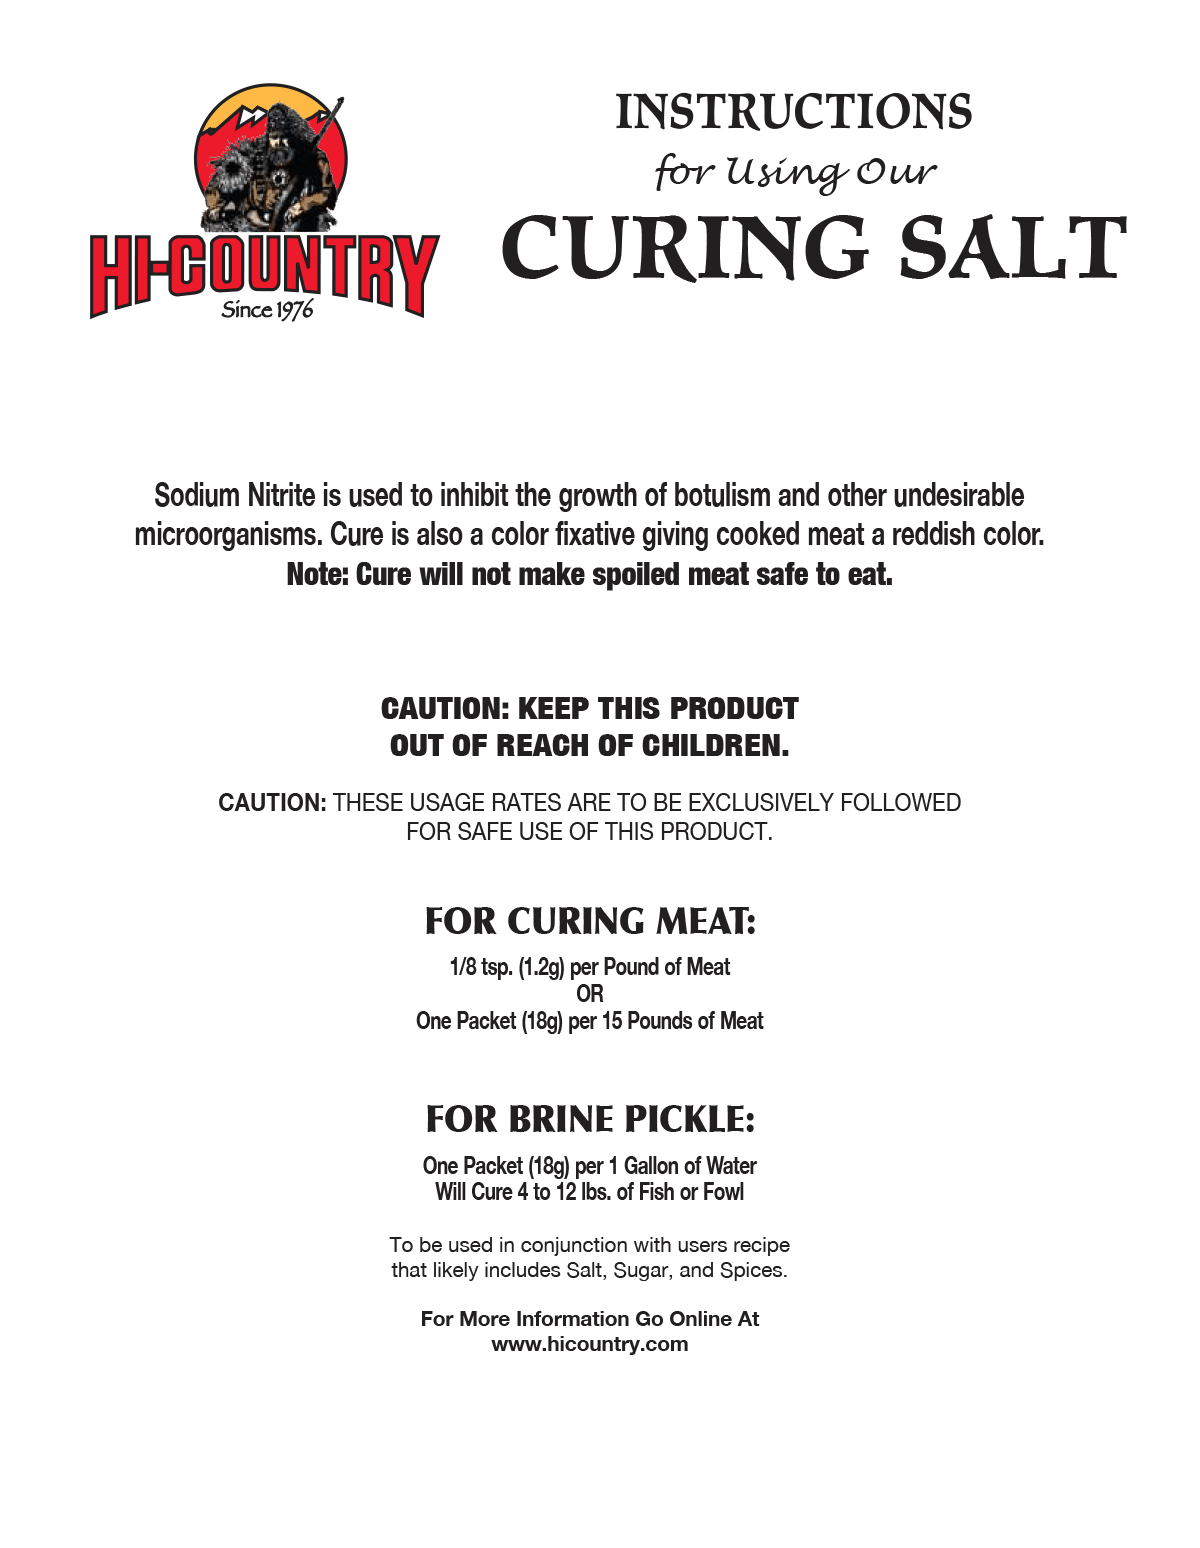 Curing Salt Instructions